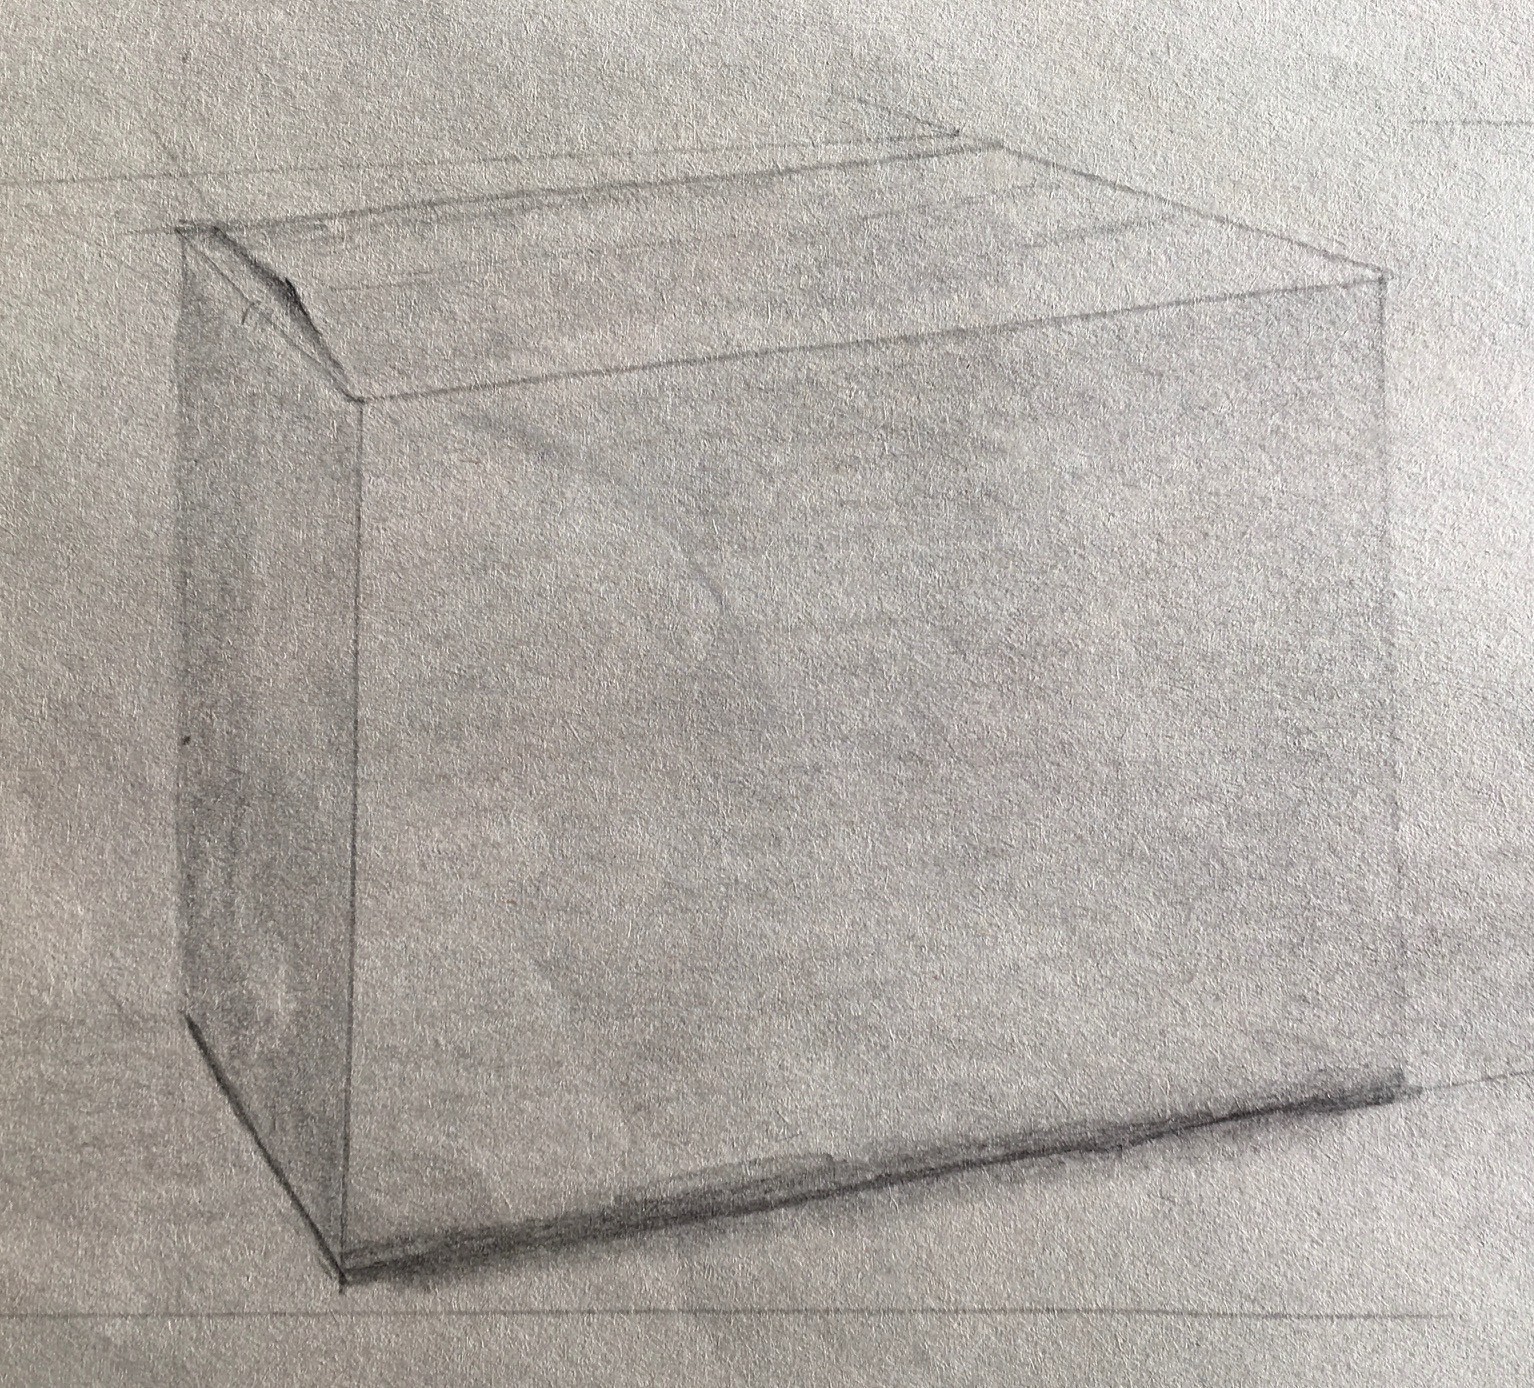 Box #1, 2018
Pencil on Paper
6"W x 5.5"H, Walli White, artist